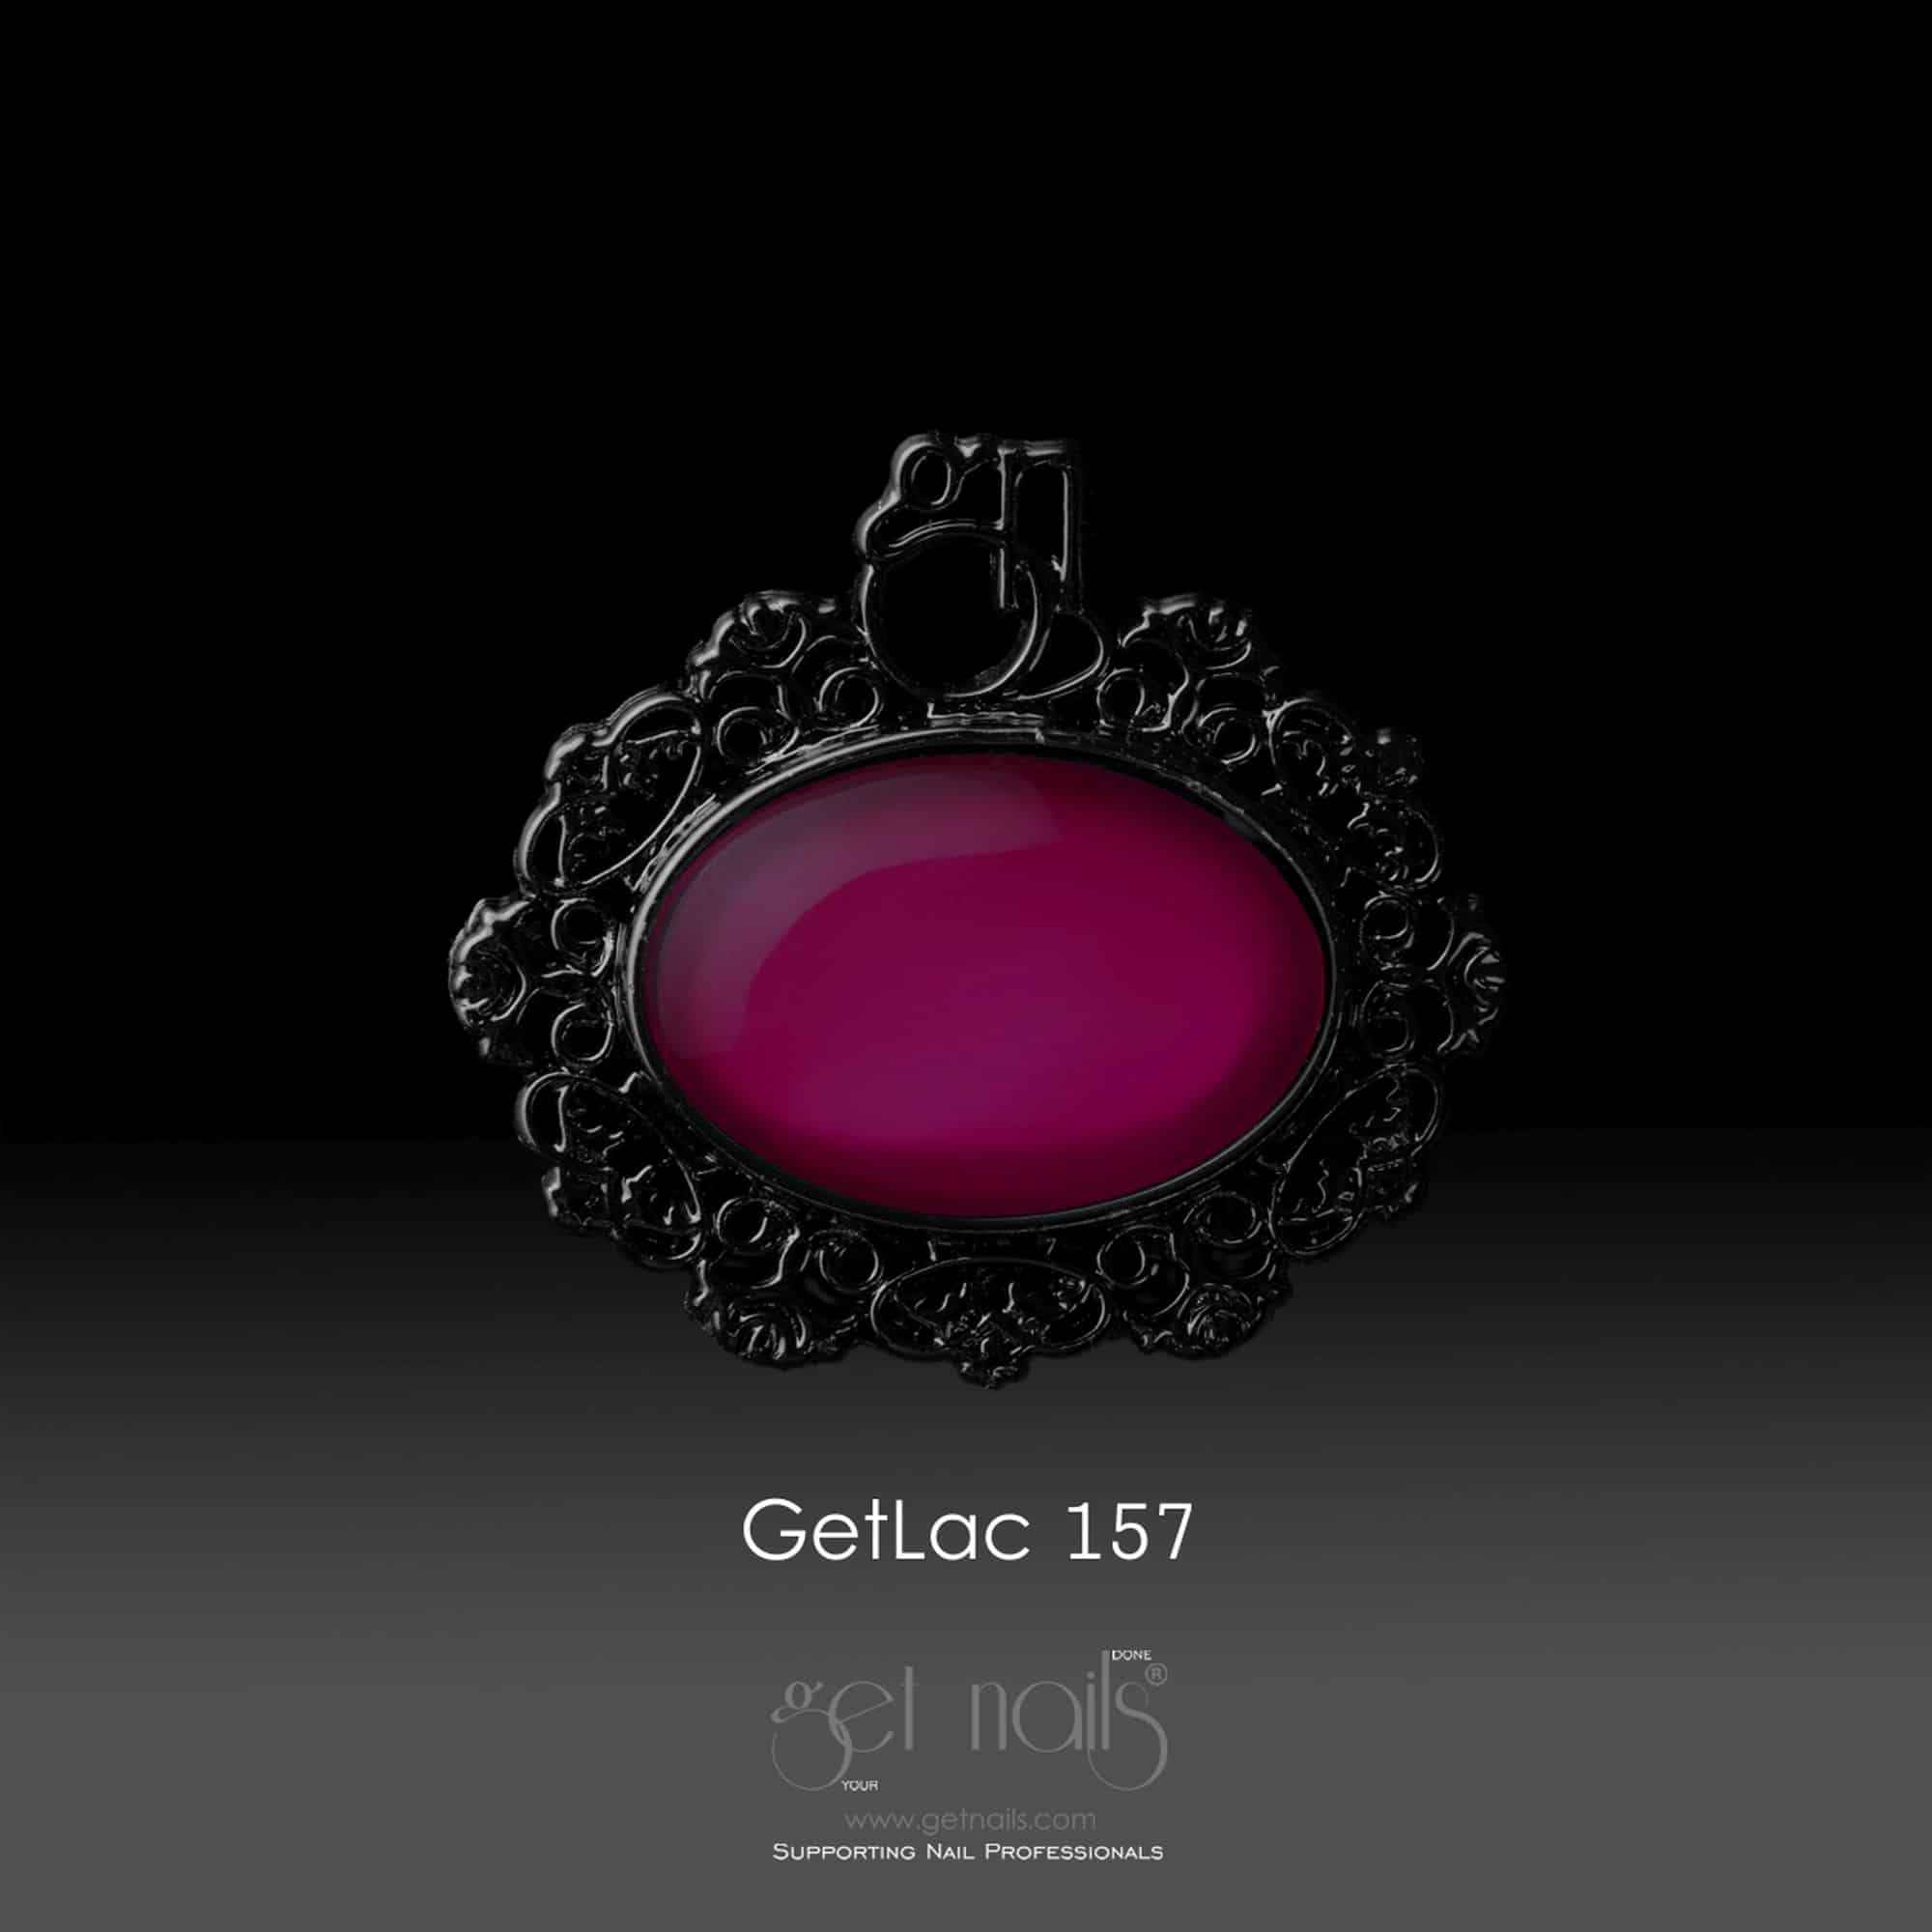 Get Nails Austria - GetLac 157 15g